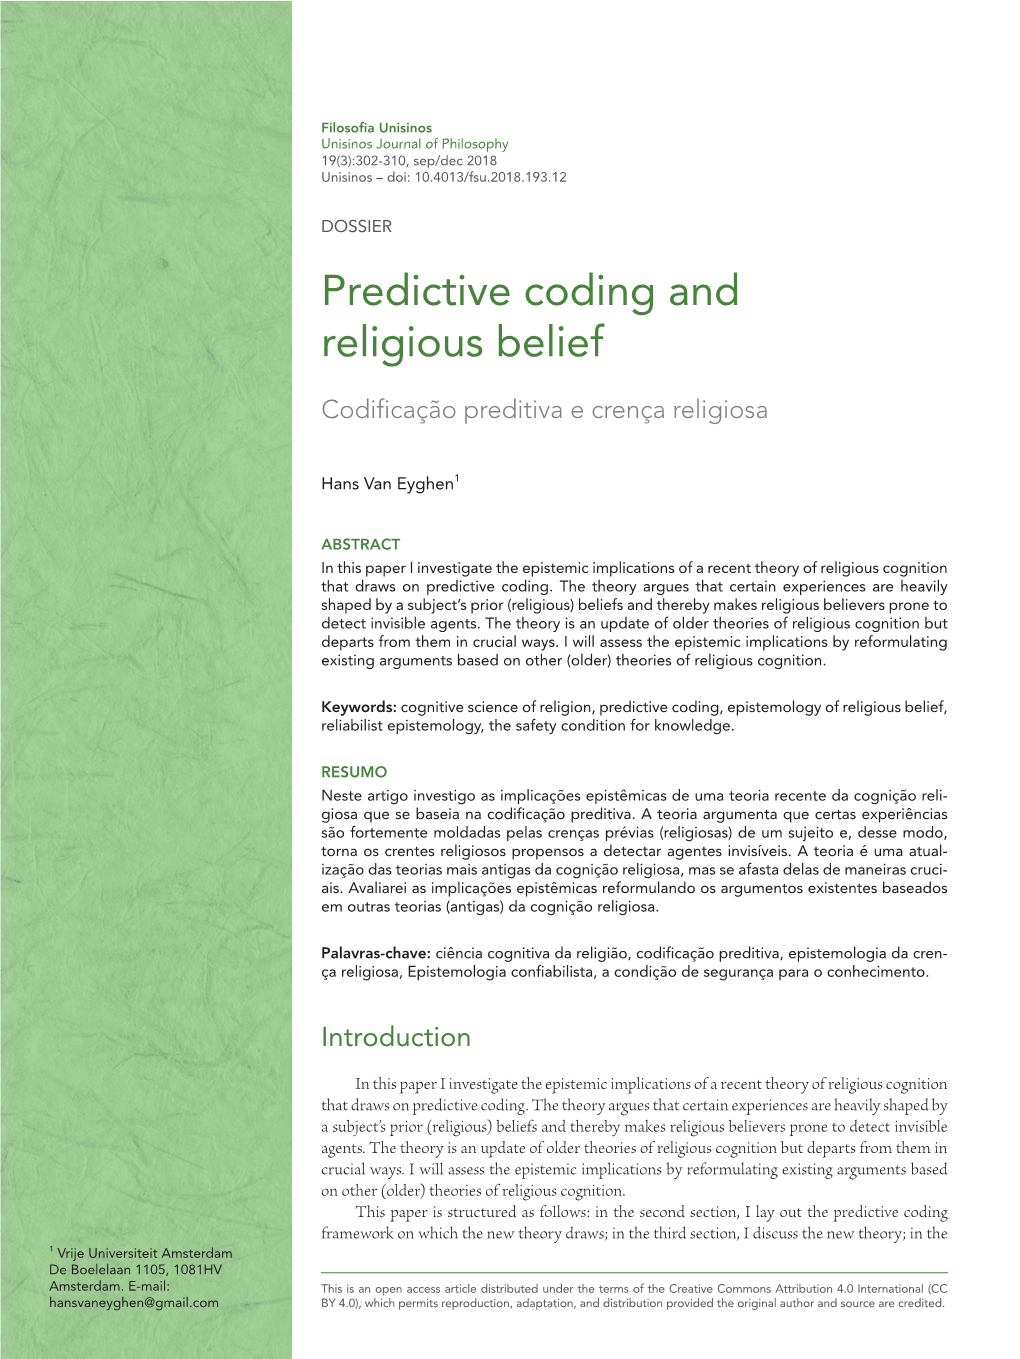 Predictive Coding and Religious Belief